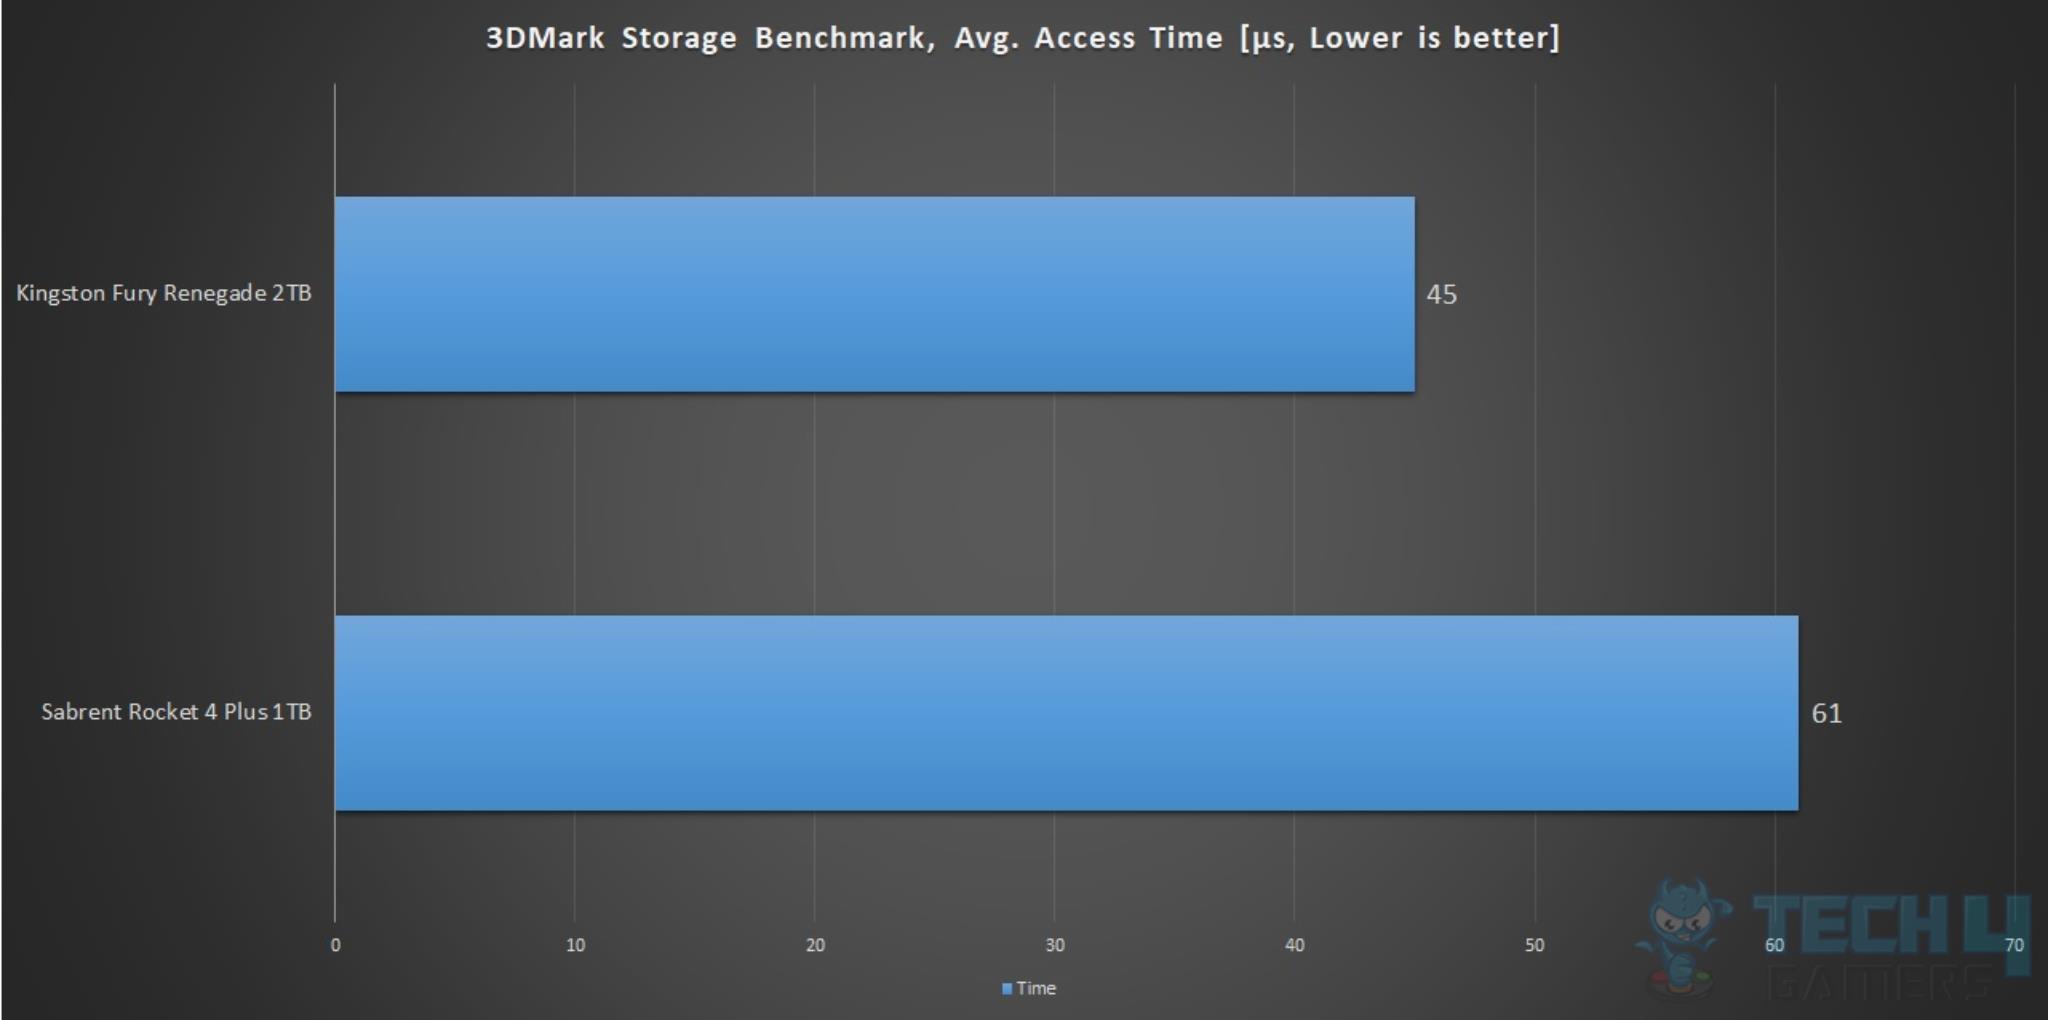 Kingston Fury Renegade 2TB NVMe SSD — 3DMARK Storage Average Access Time Benchmark 